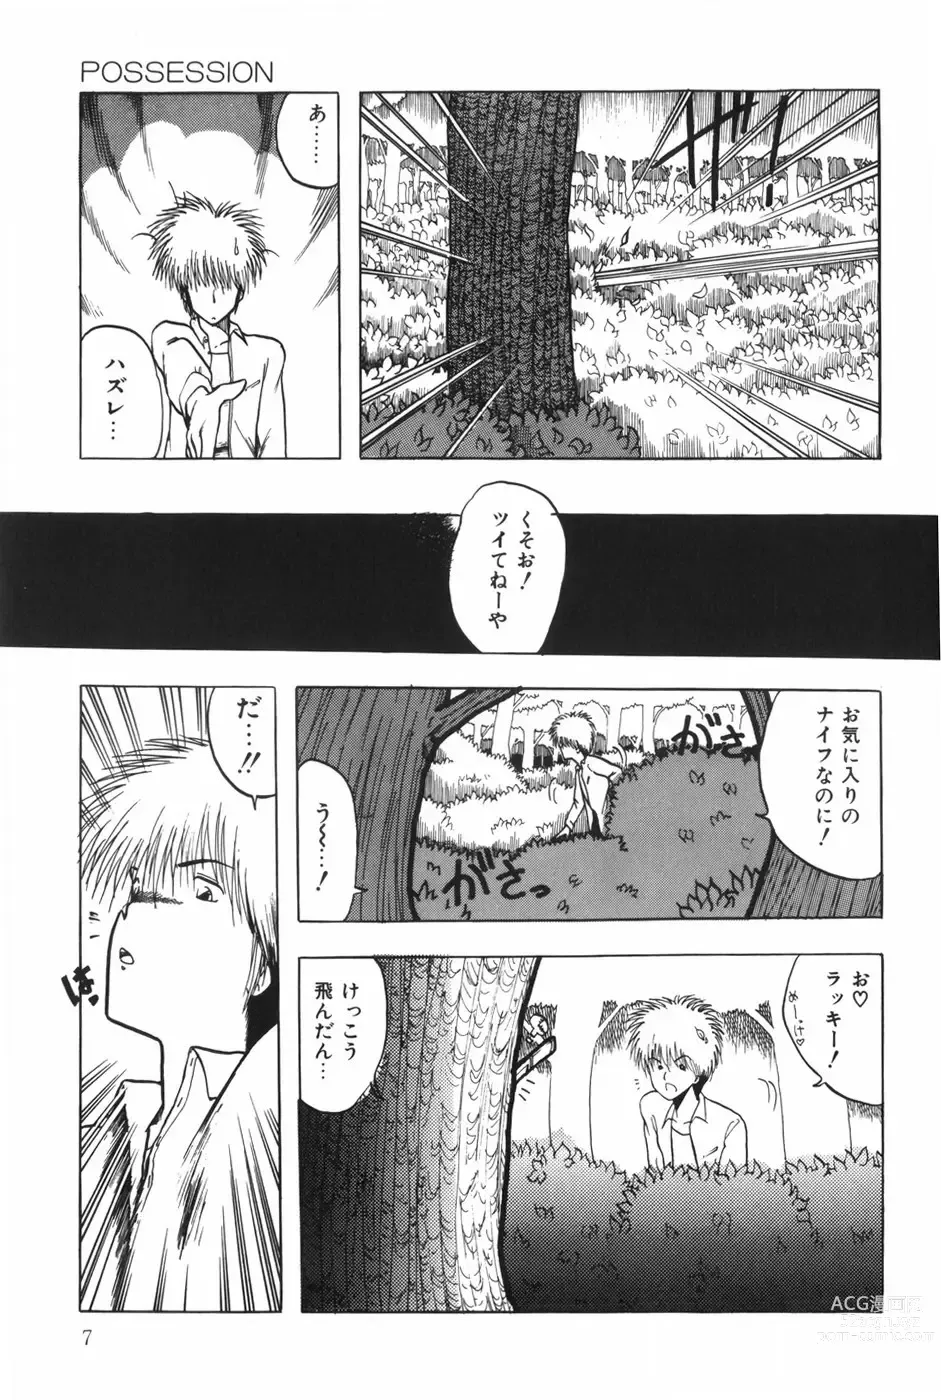 Page 13 of manga POSSESSION